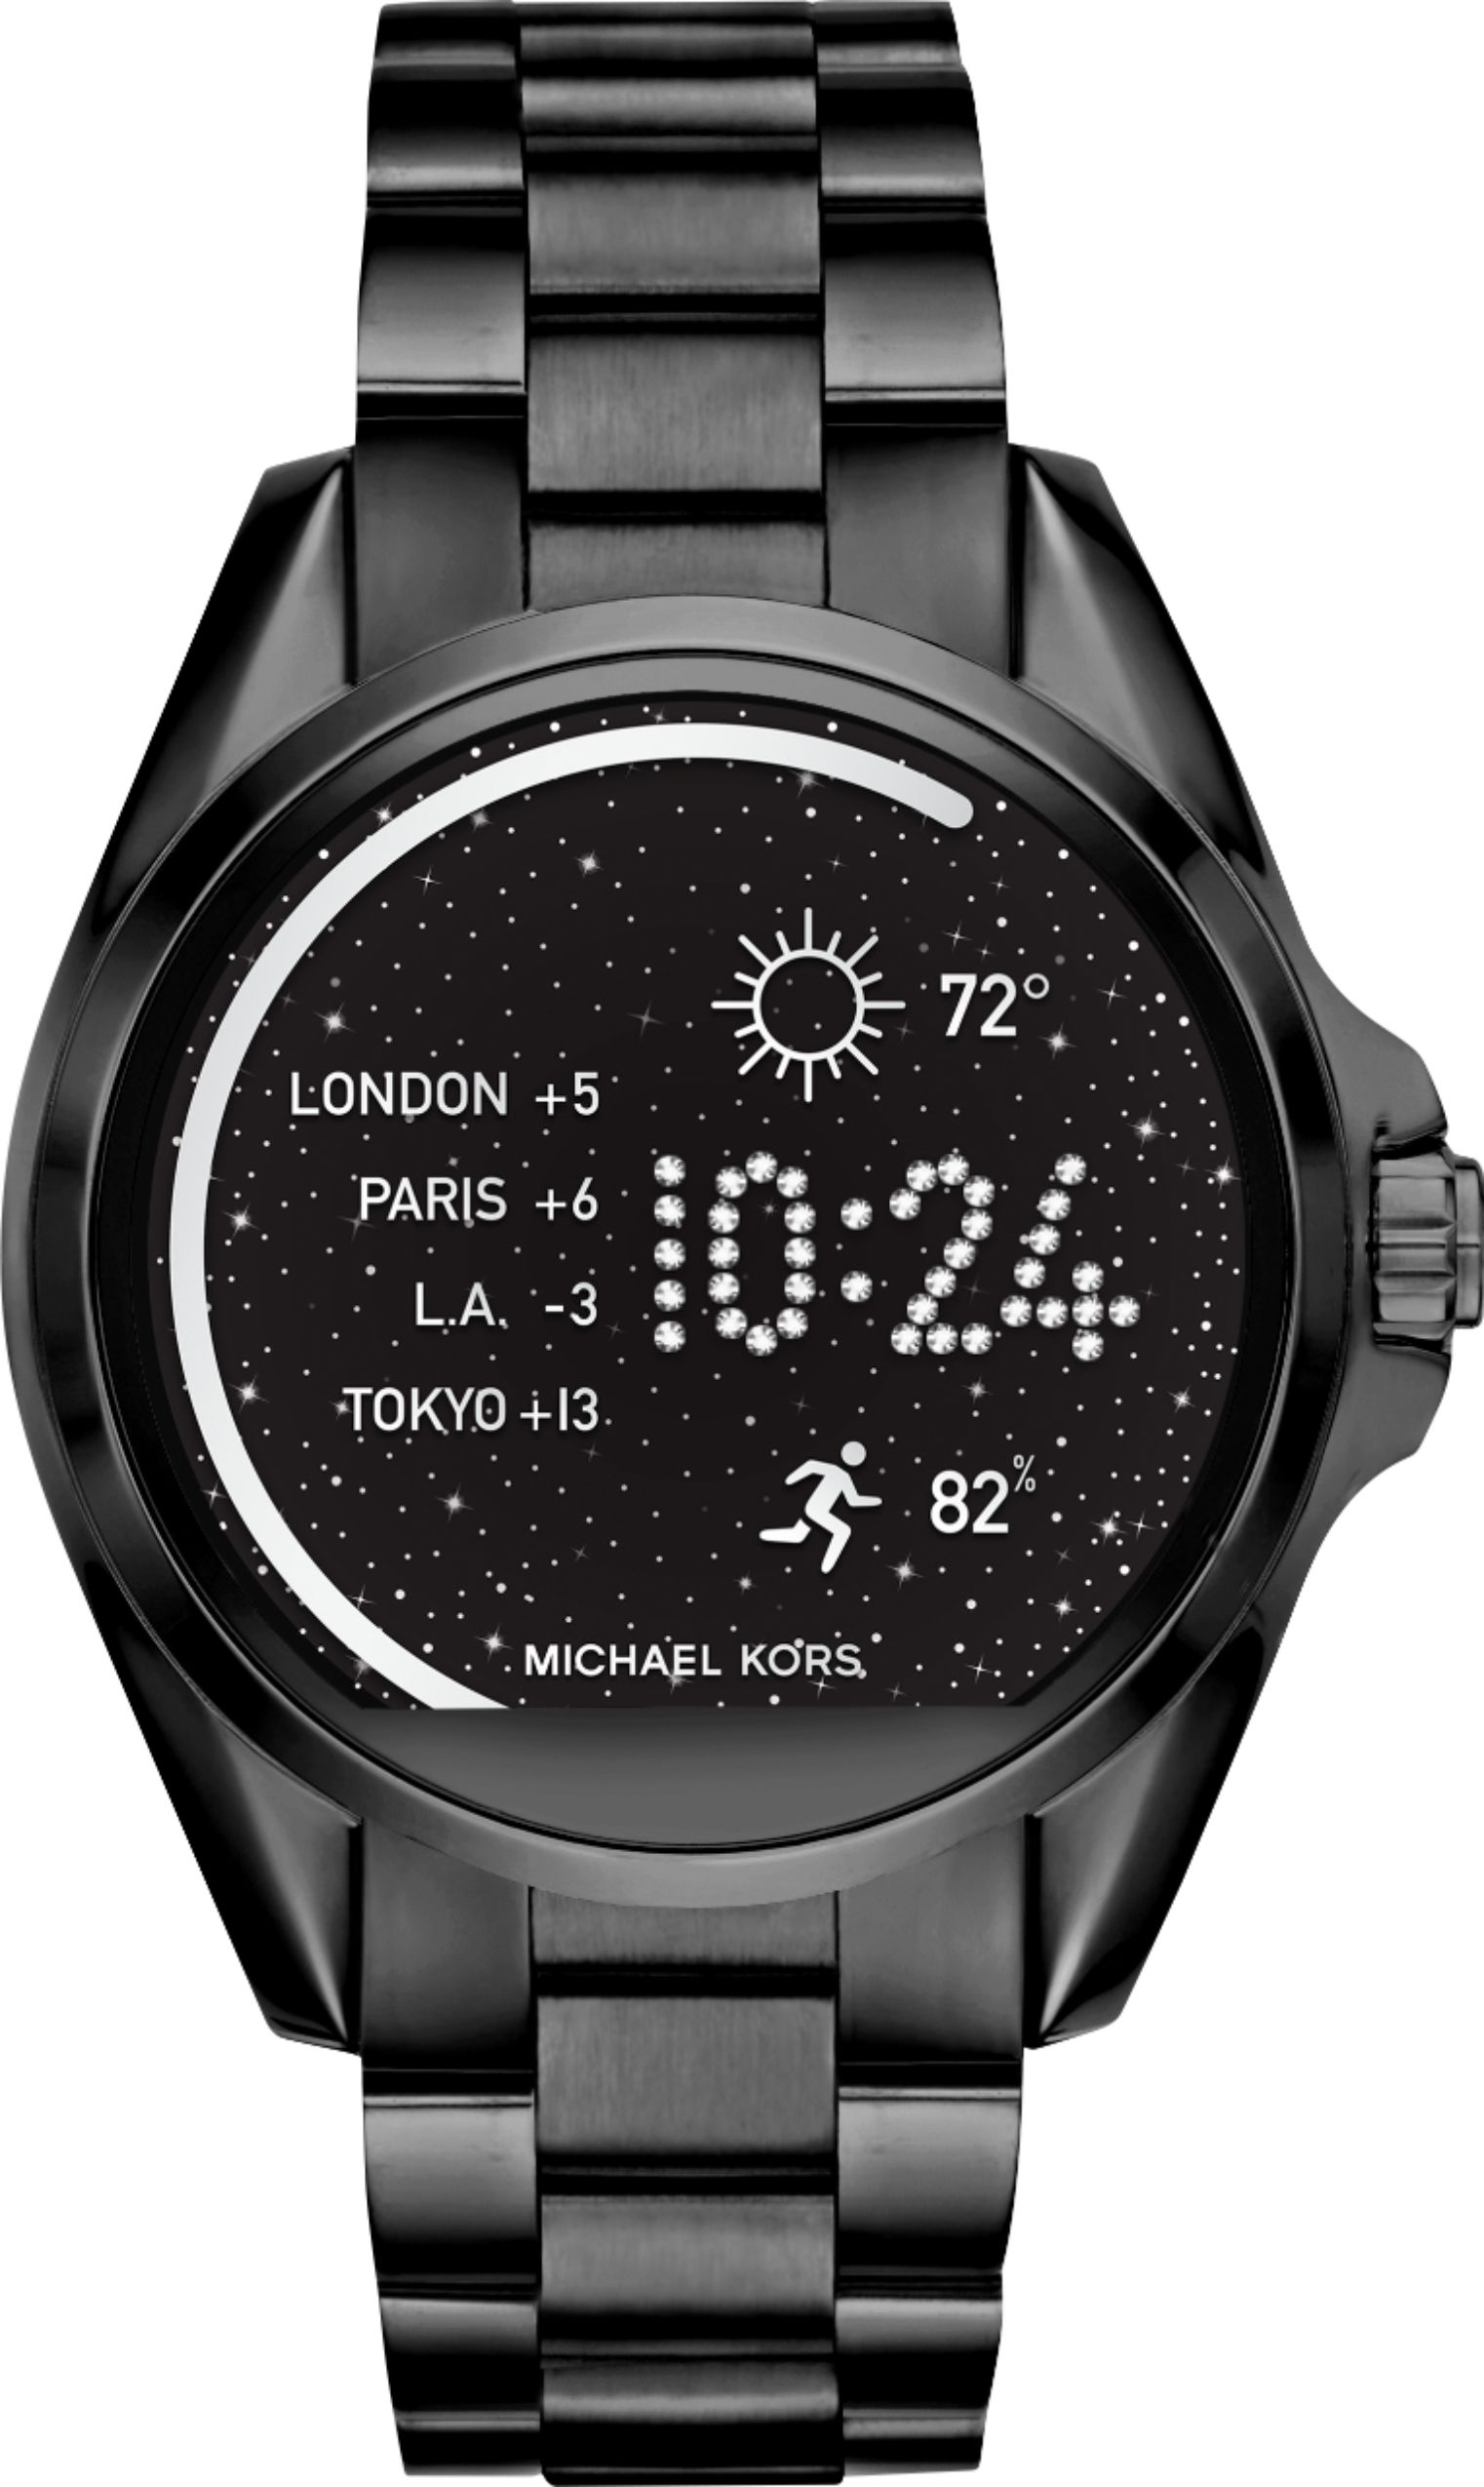 michael kors access bradshaw smartwatch review